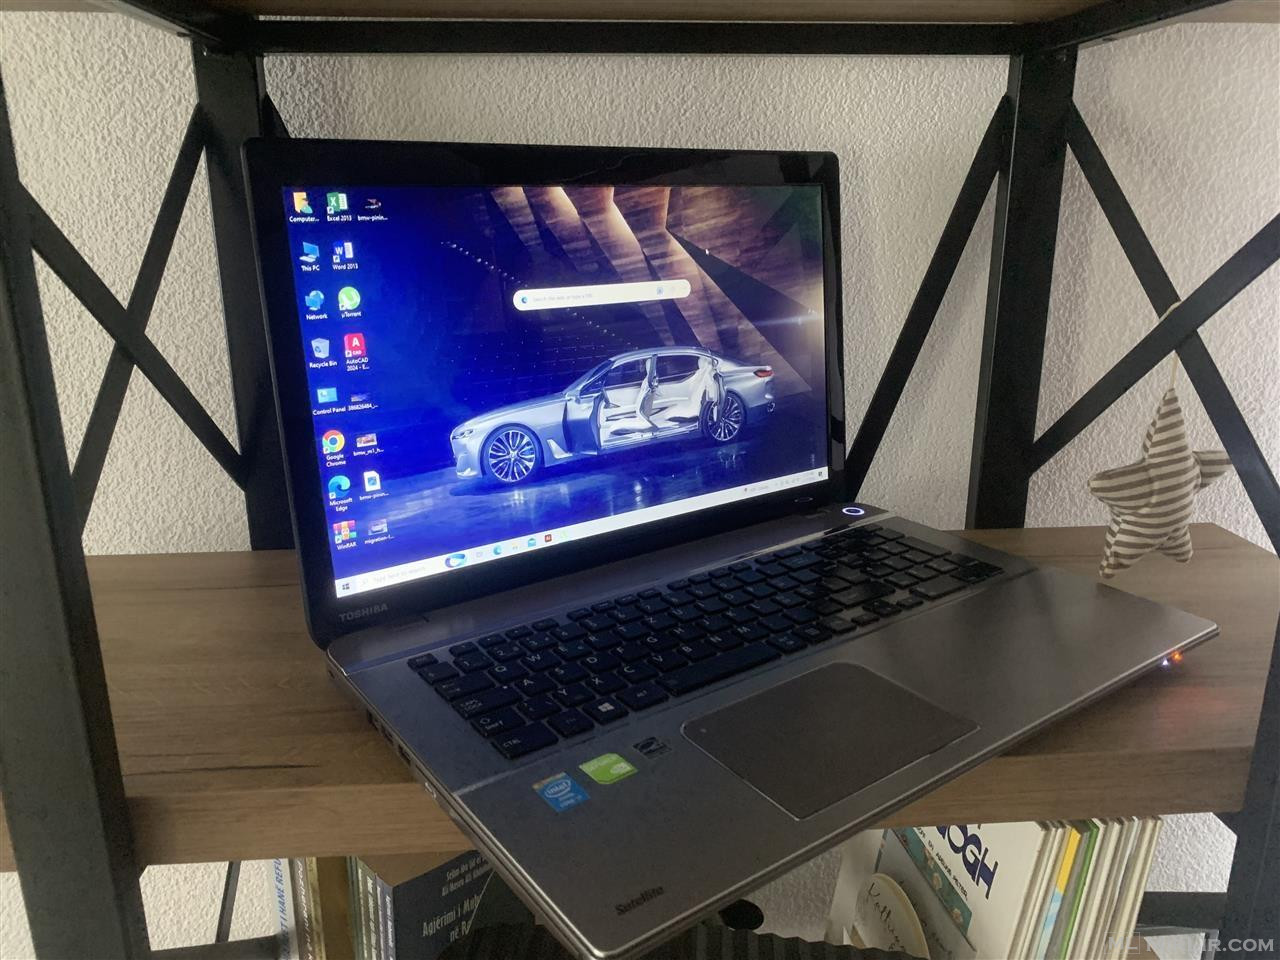 Shitet Laptop TOSHIBA - Me ekran të madh 17”inch